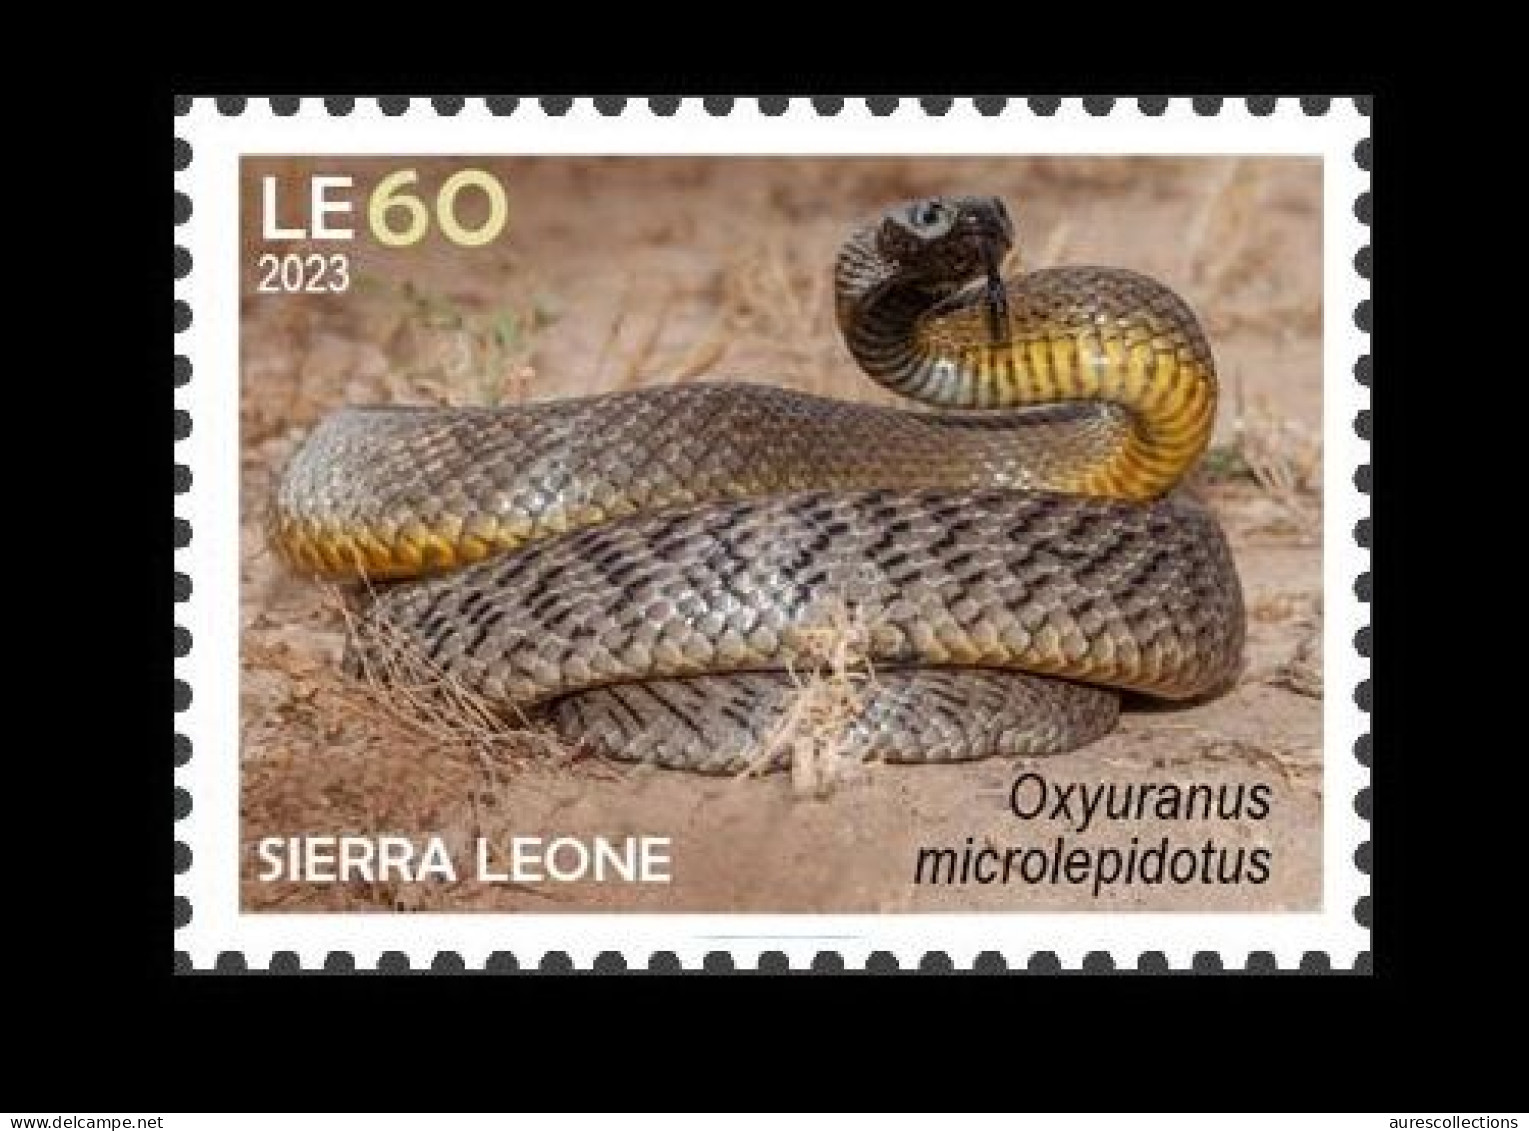 SIERRA LEONE 2023 STAMP 1V - POISONOUS TOXIC VENOMOUS - SNAKE SNAKES SERPENT SERPENTS REPTILES REPTILE - MNH - Serpents